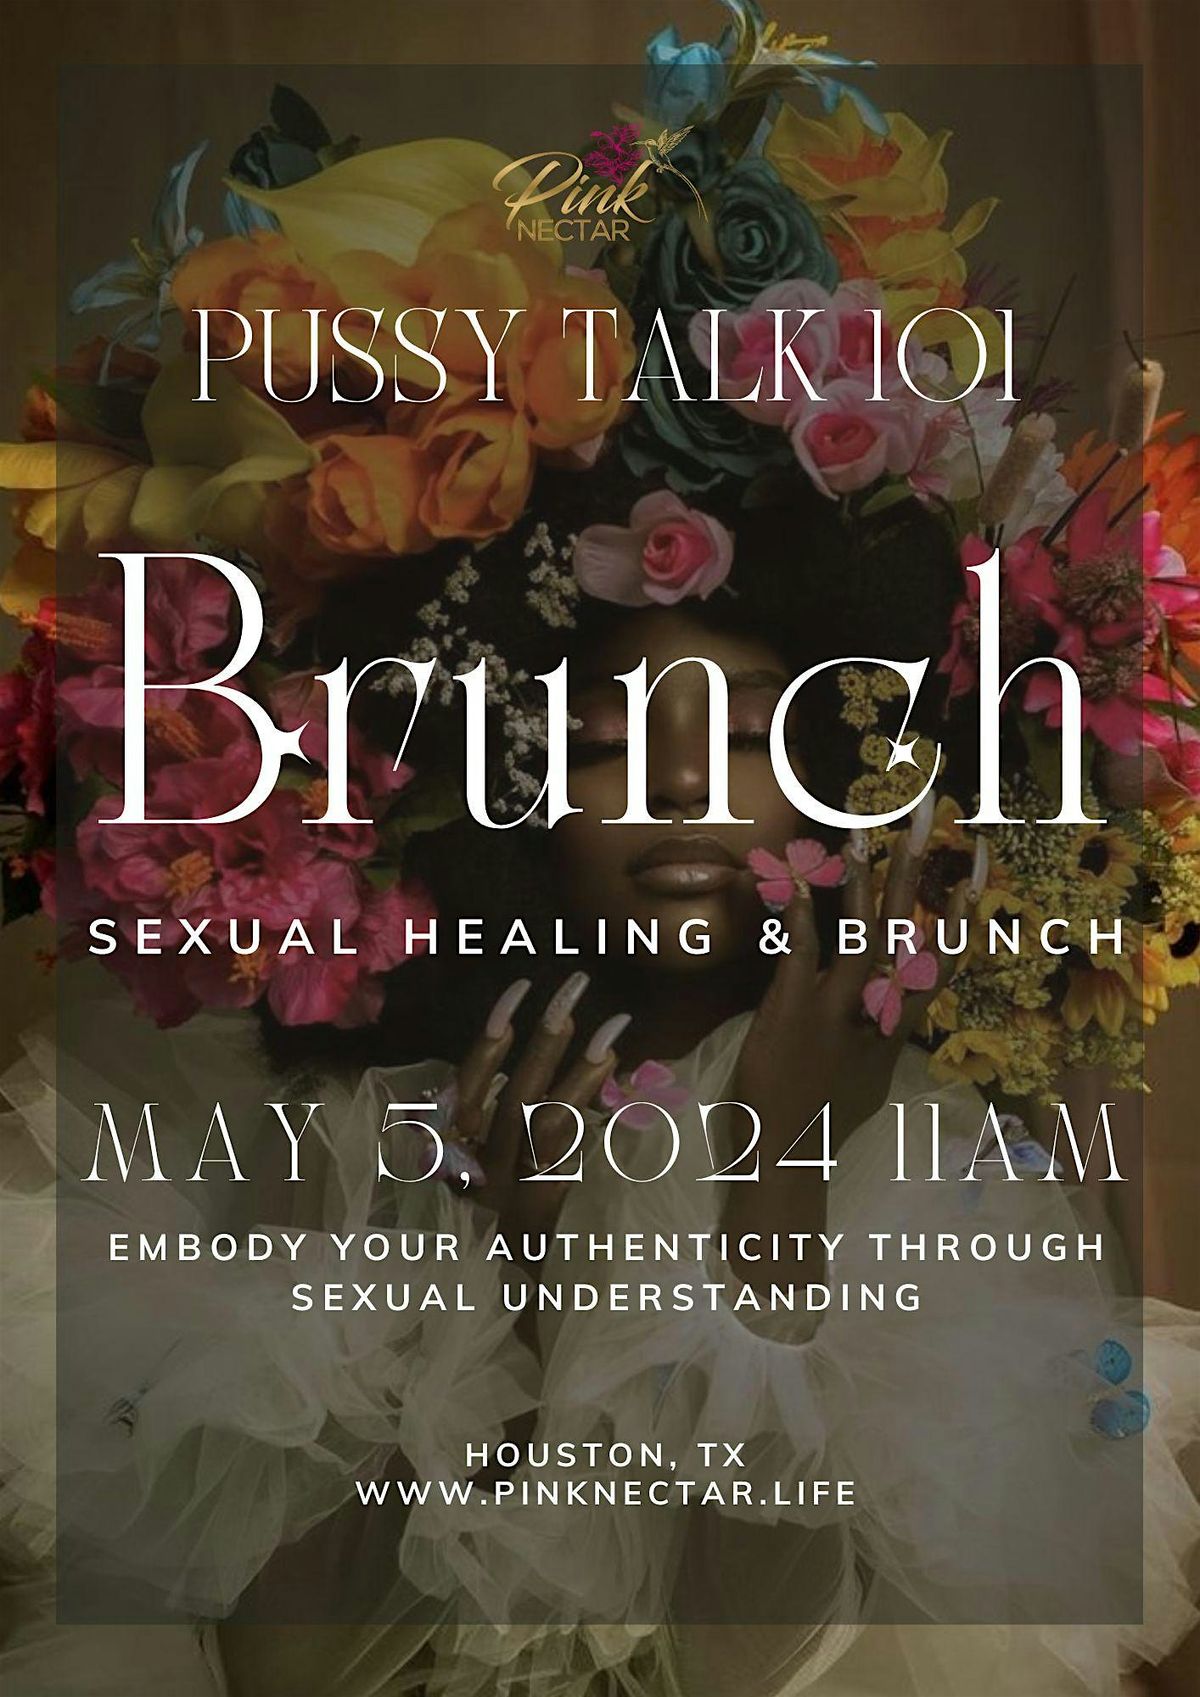 Pu$$y Talk 101: Thee Premier Sexual Healing Brunch